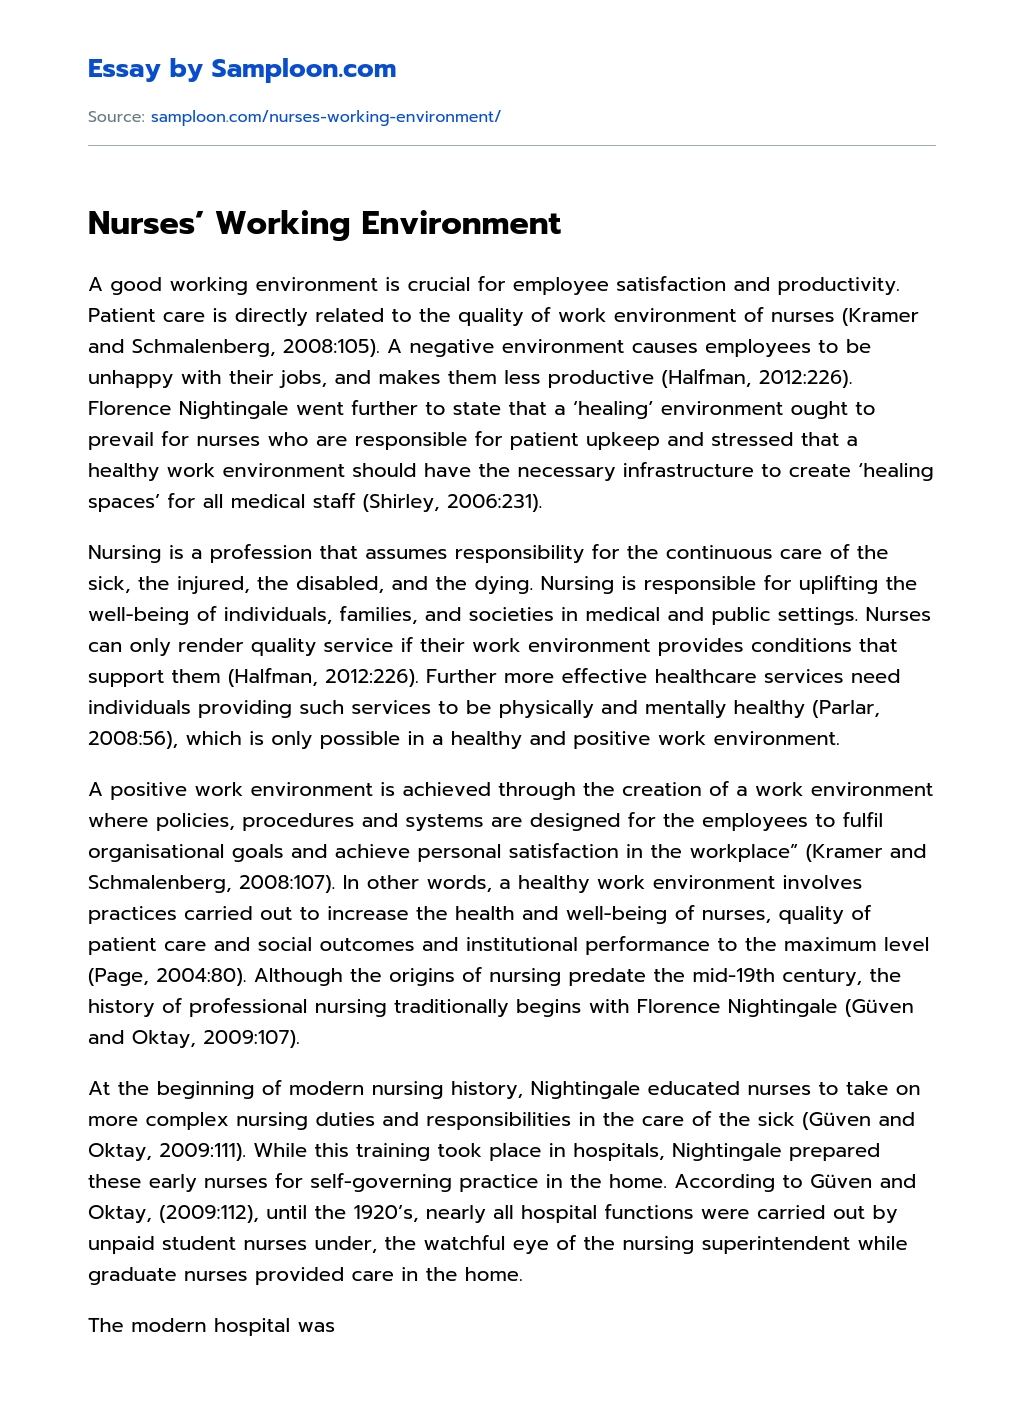 Nurses’ Working Environment essay